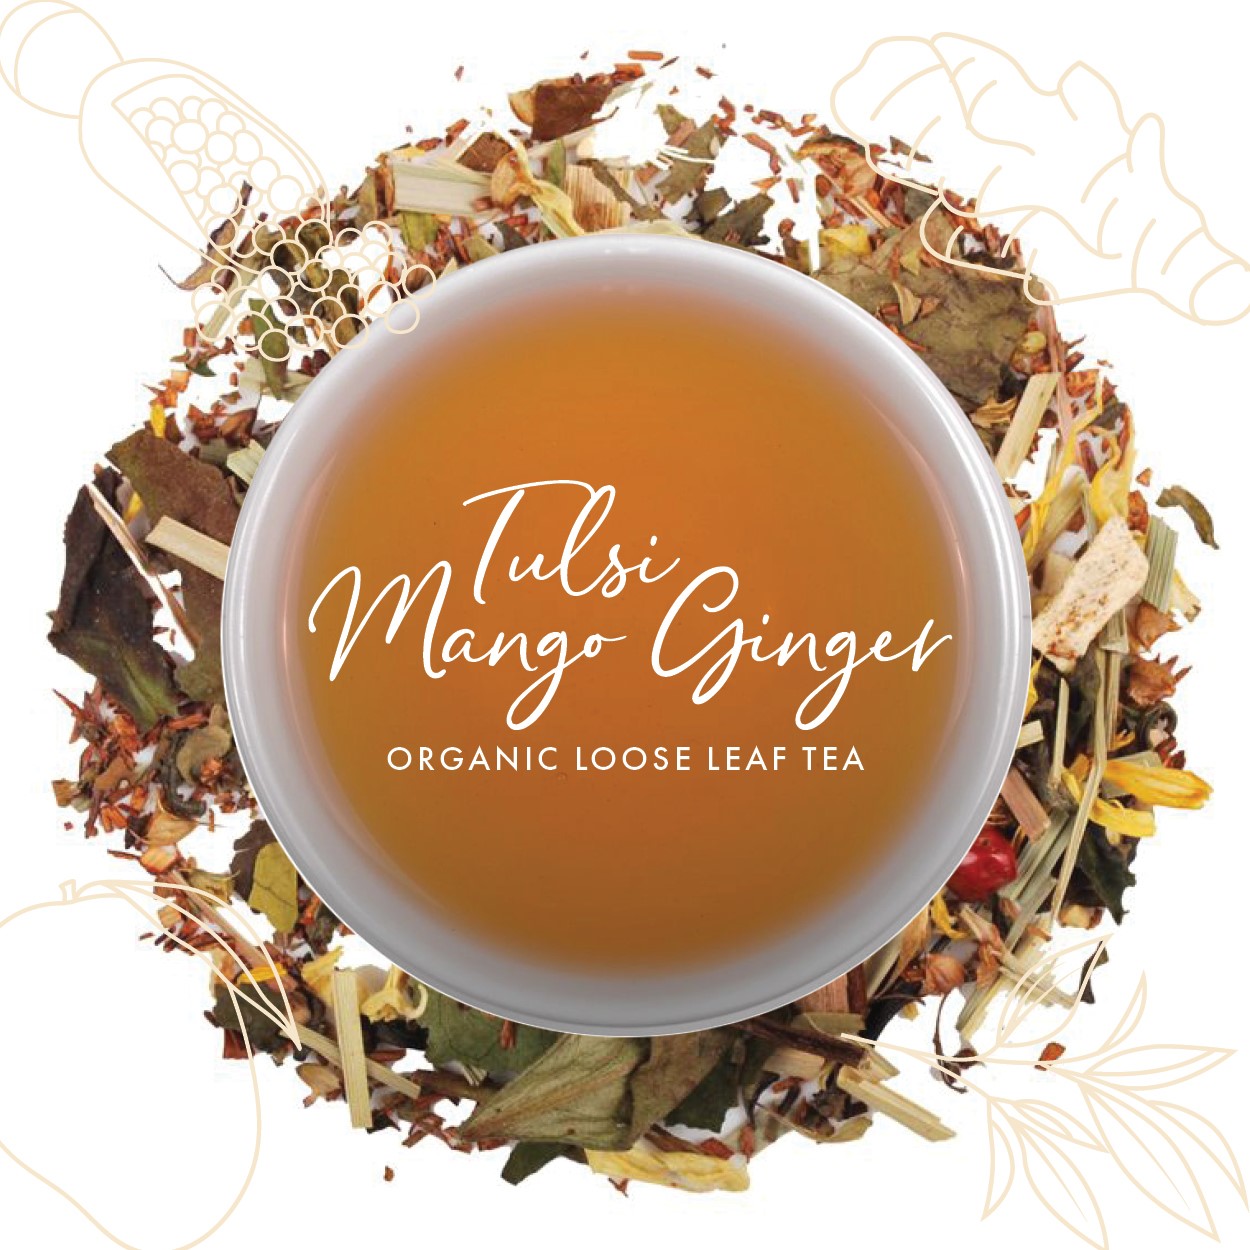 Tulsi Mango Ginger loose leaf tea